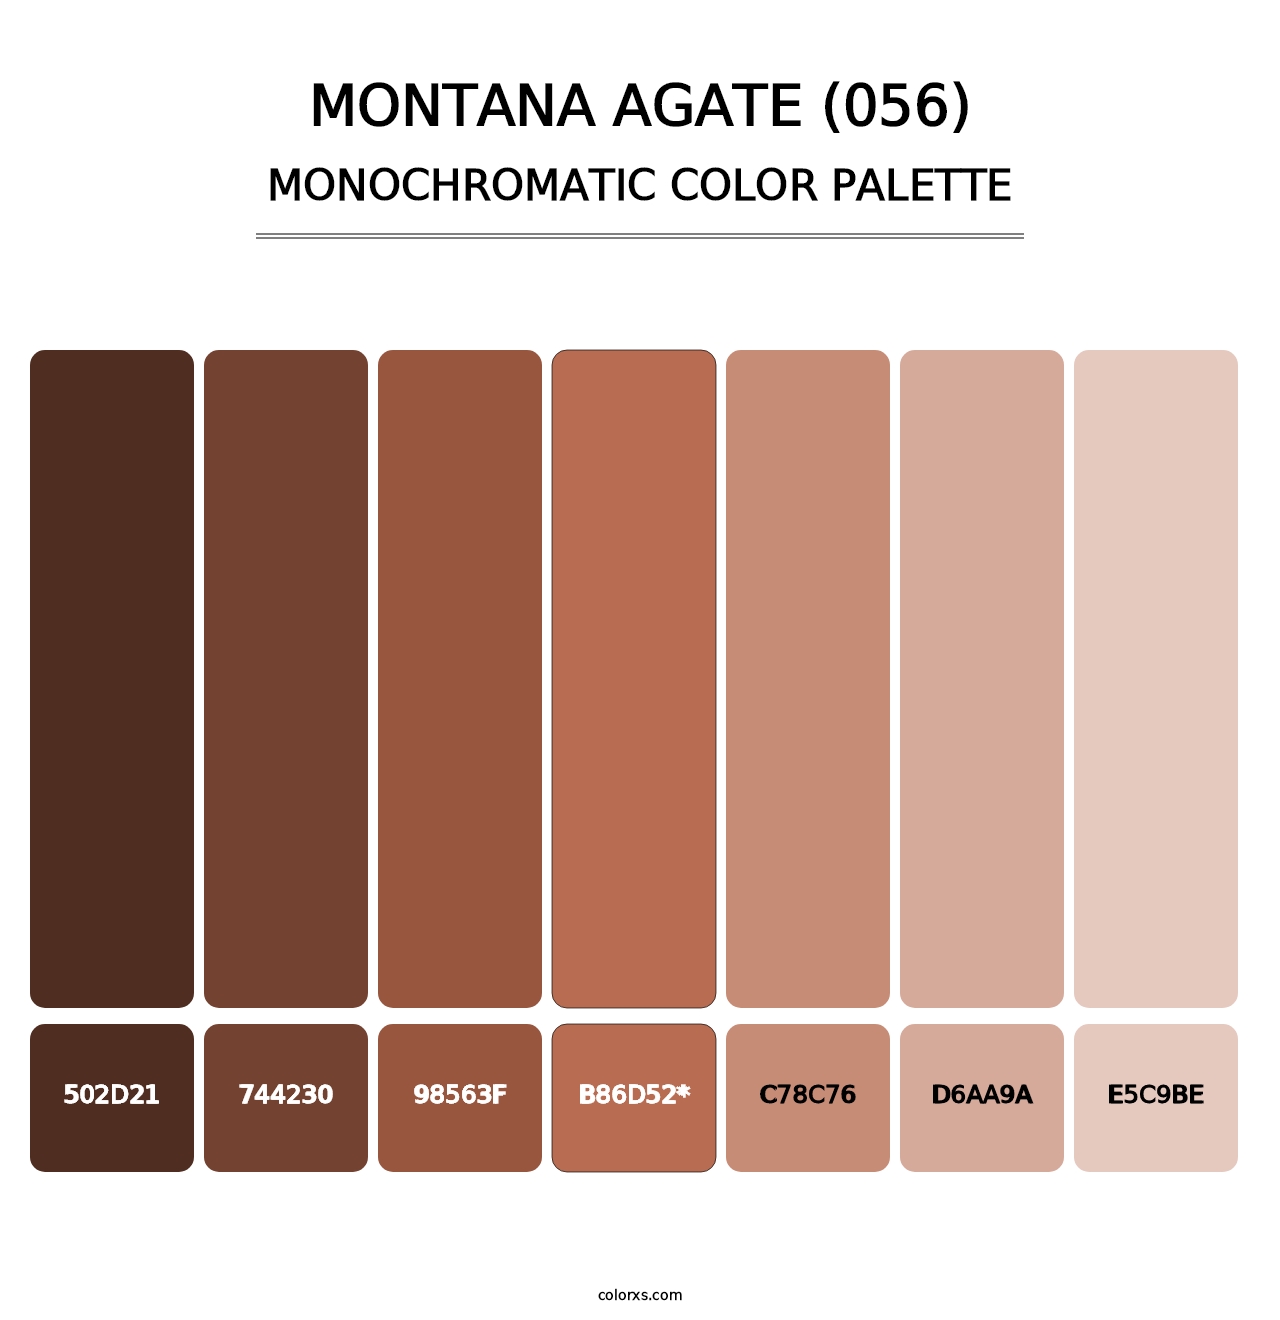 Montana Agate (056) - Monochromatic Color Palette